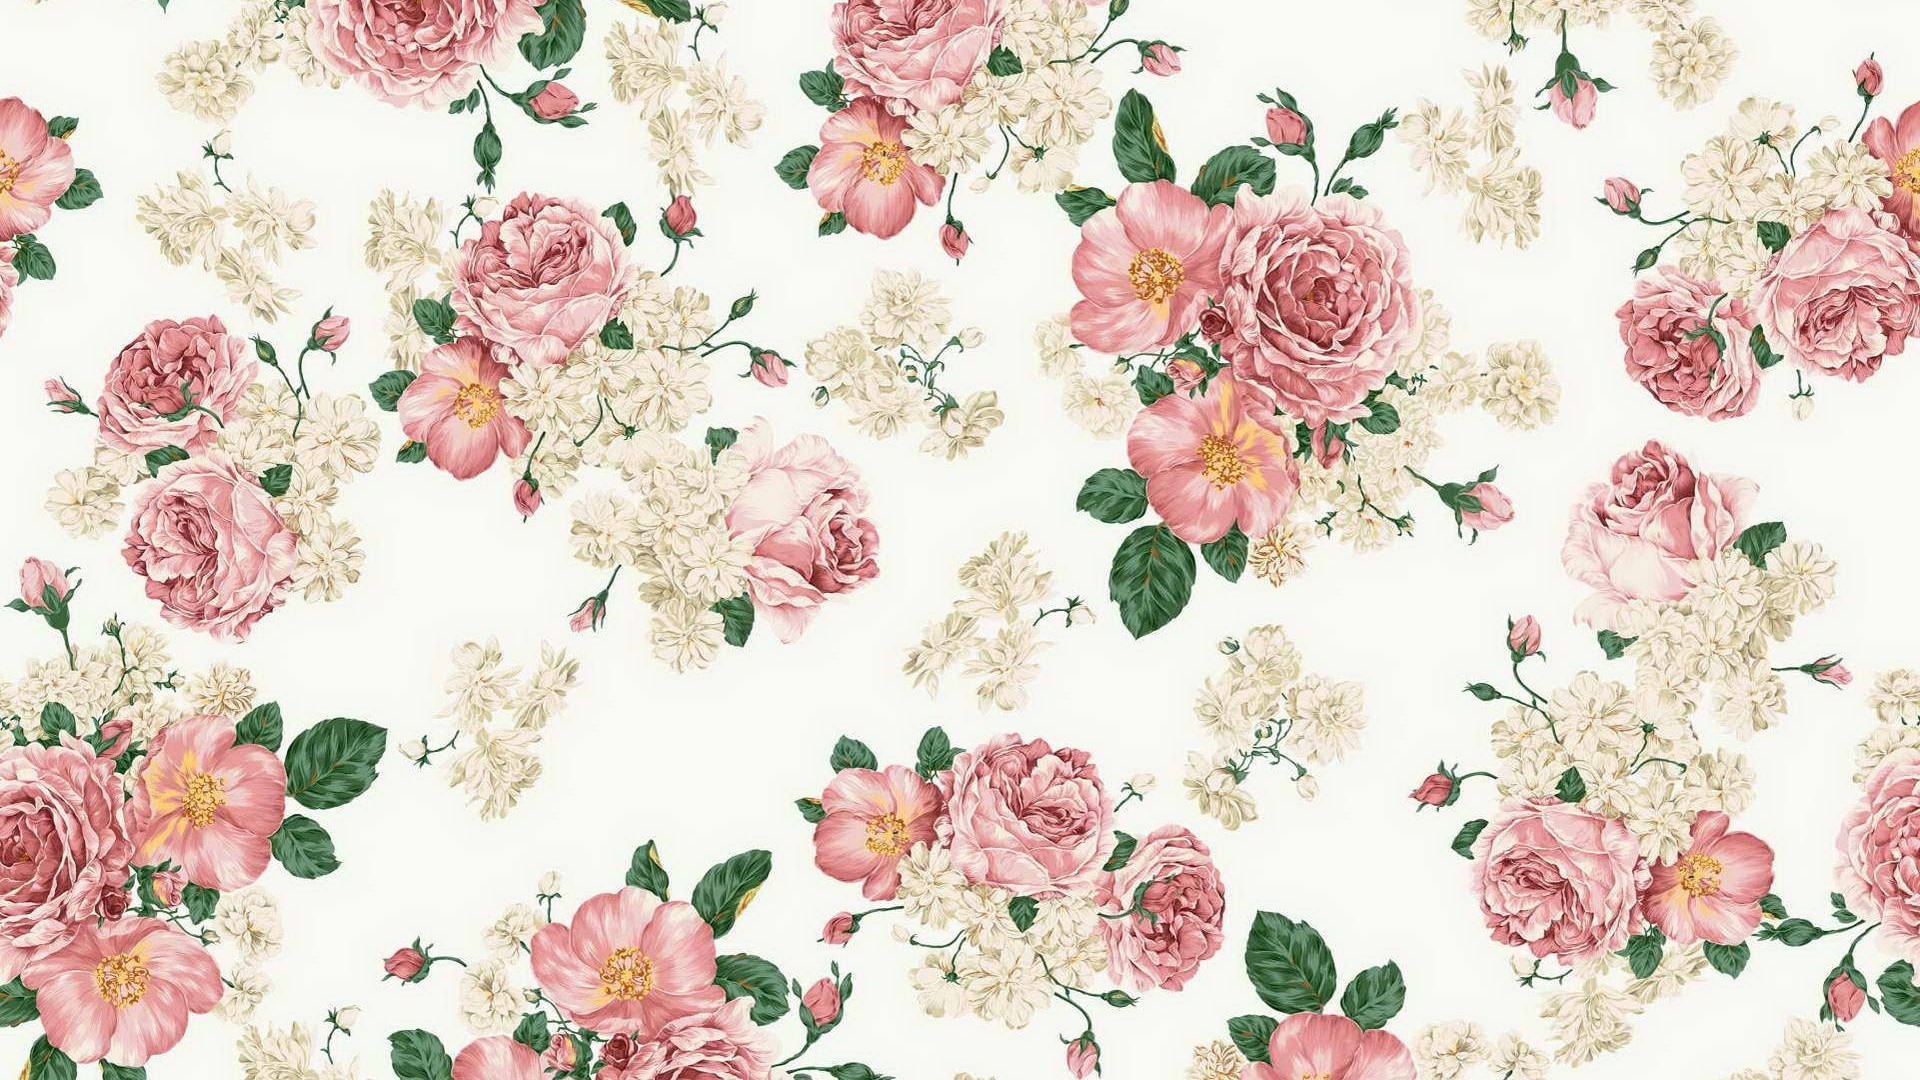 aesthetic wallpaper,pink,floral design,garden roses,pattern,rose